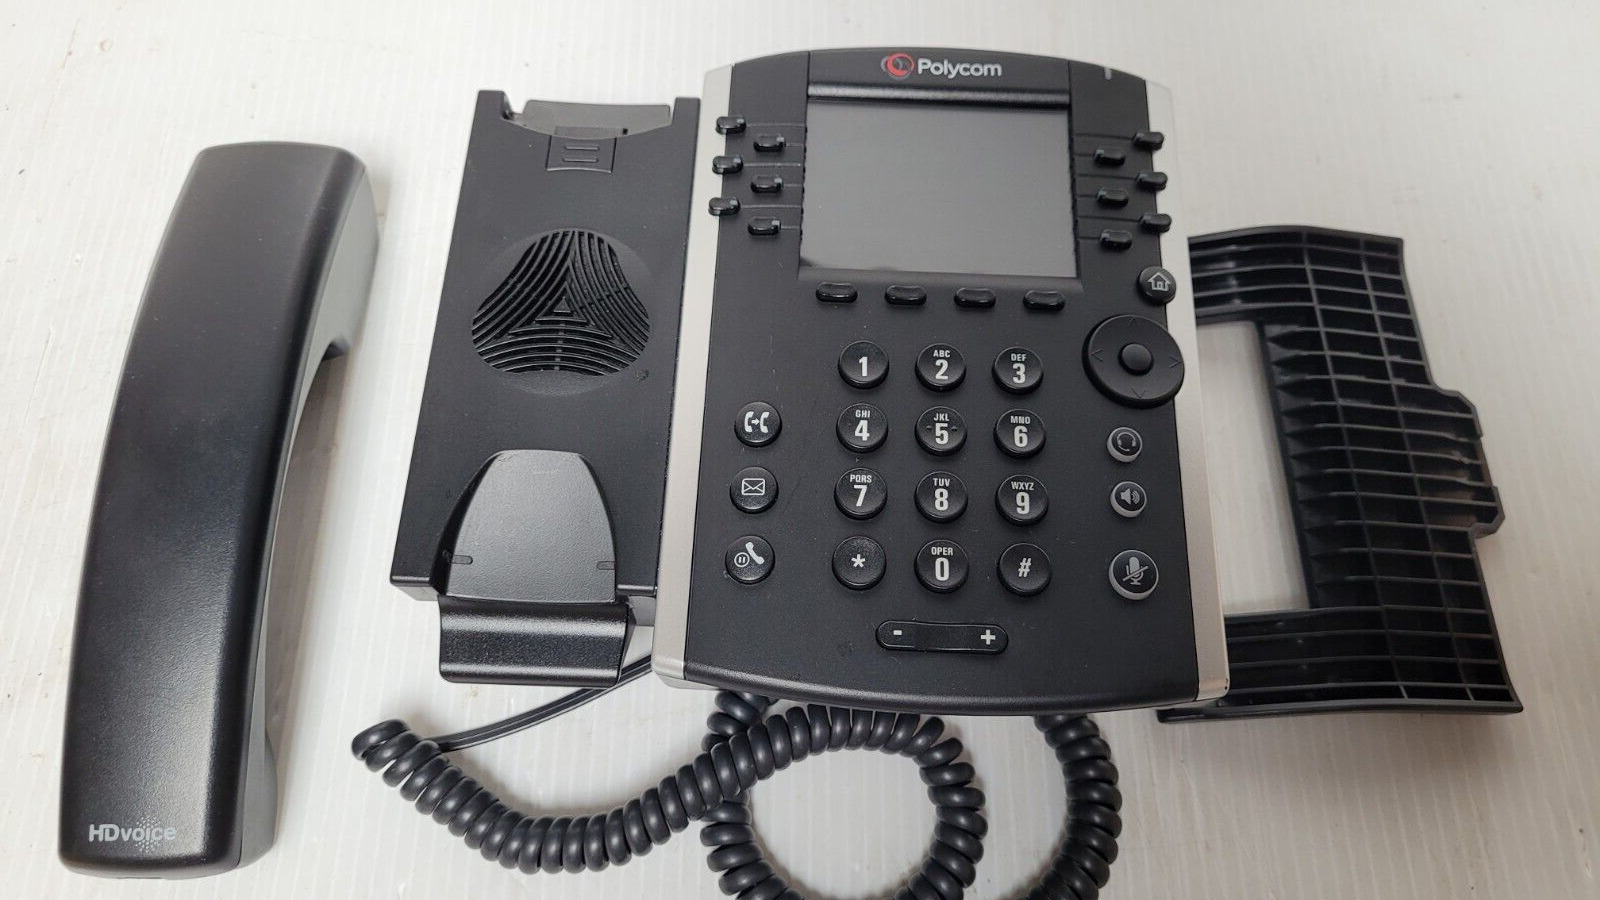 Polycom VVX 410 Gigabit IP Phone 2200-46162-025 POE VoIP Telephone